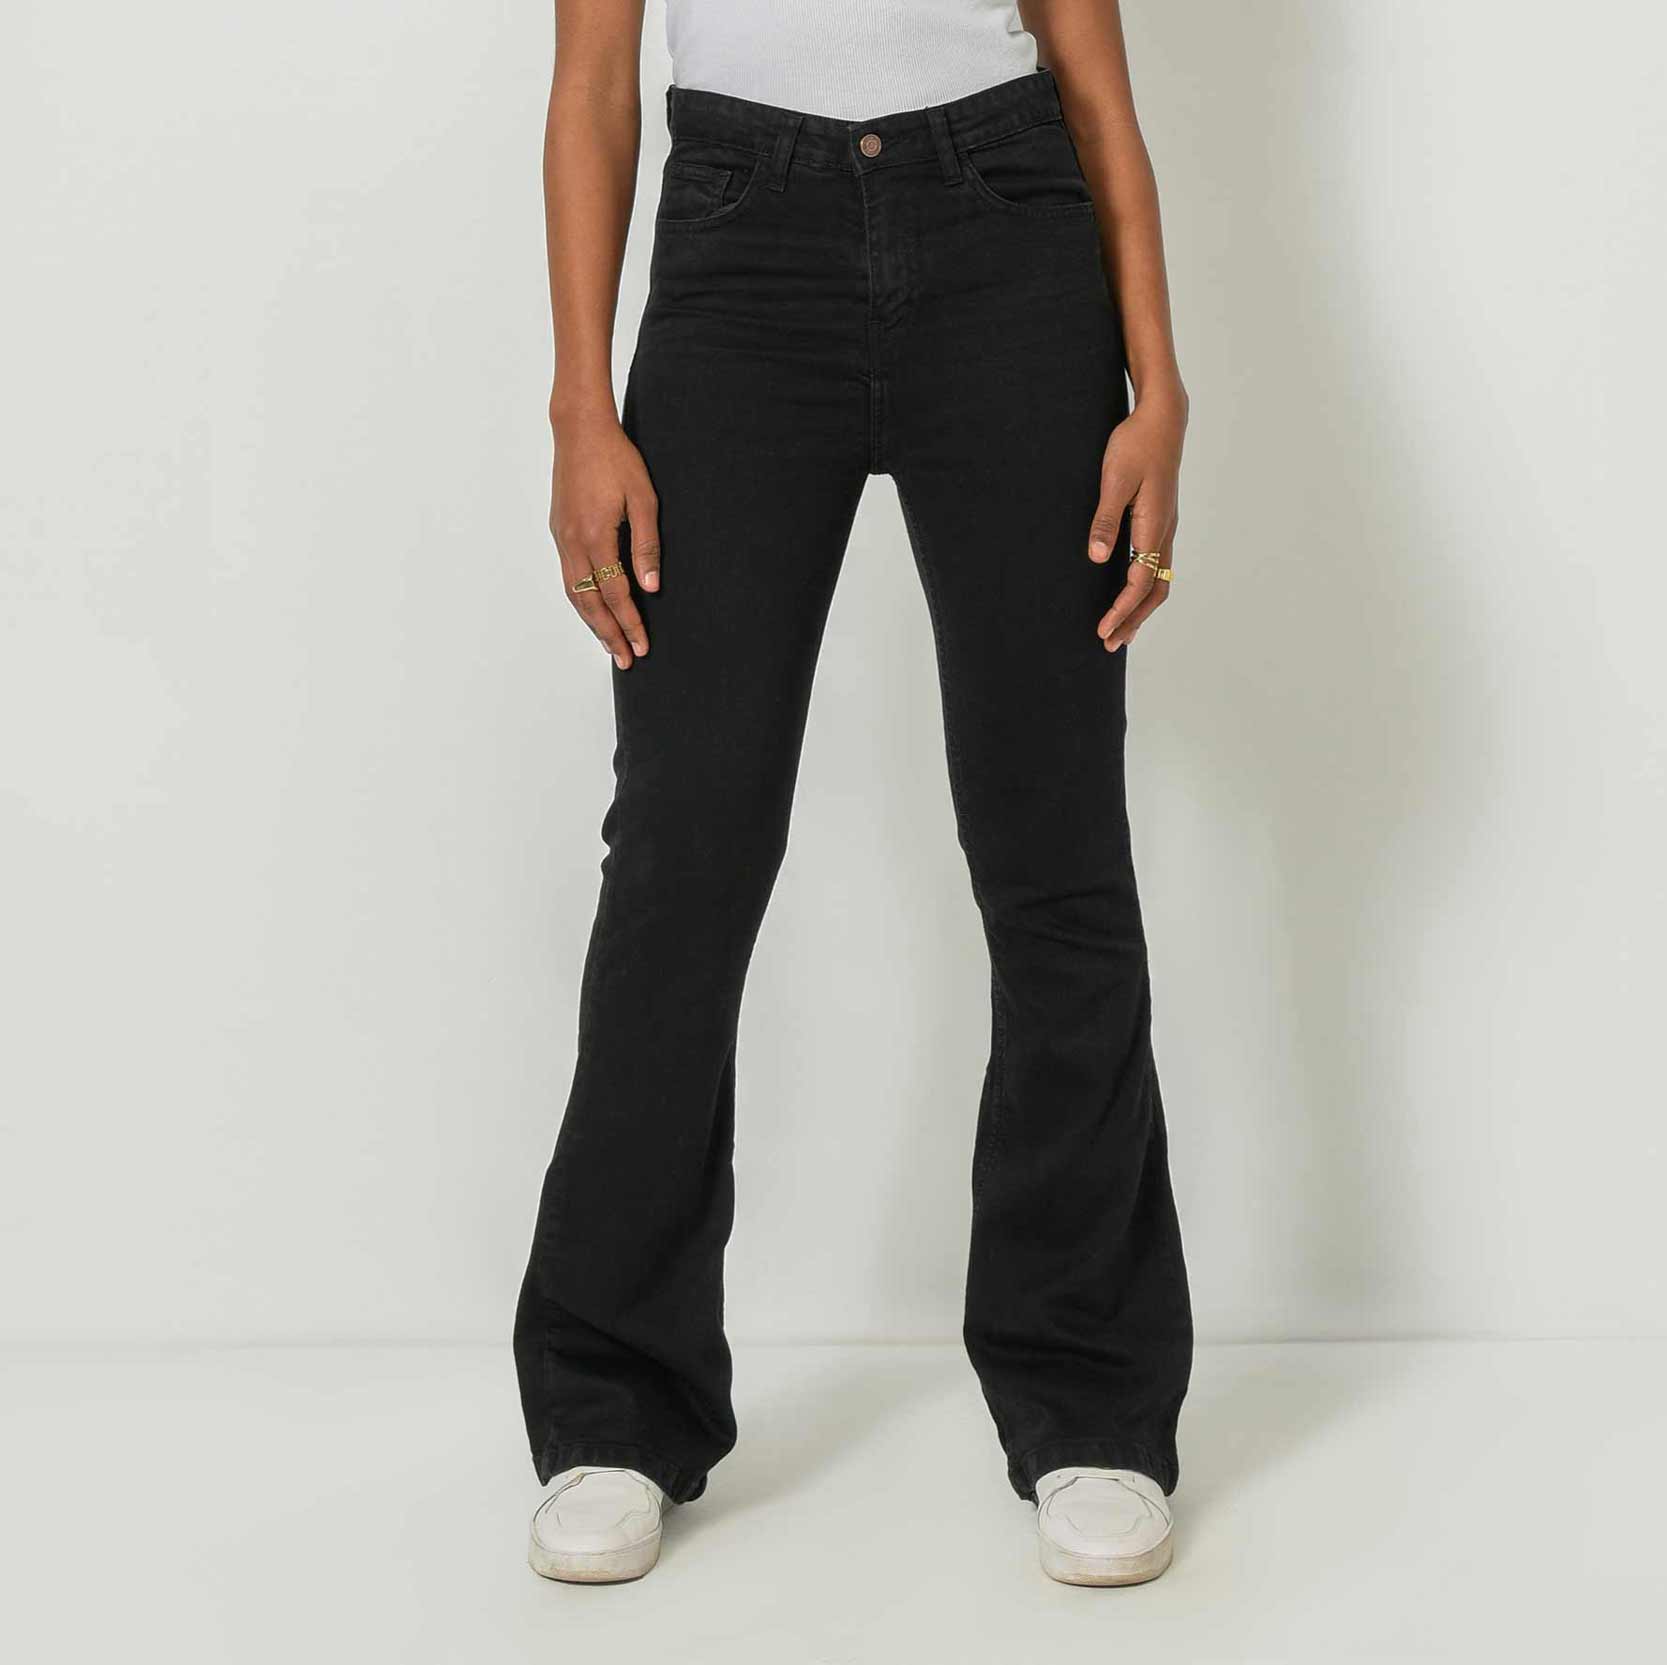 High-Waist Charcoal Black Flared Jeans.